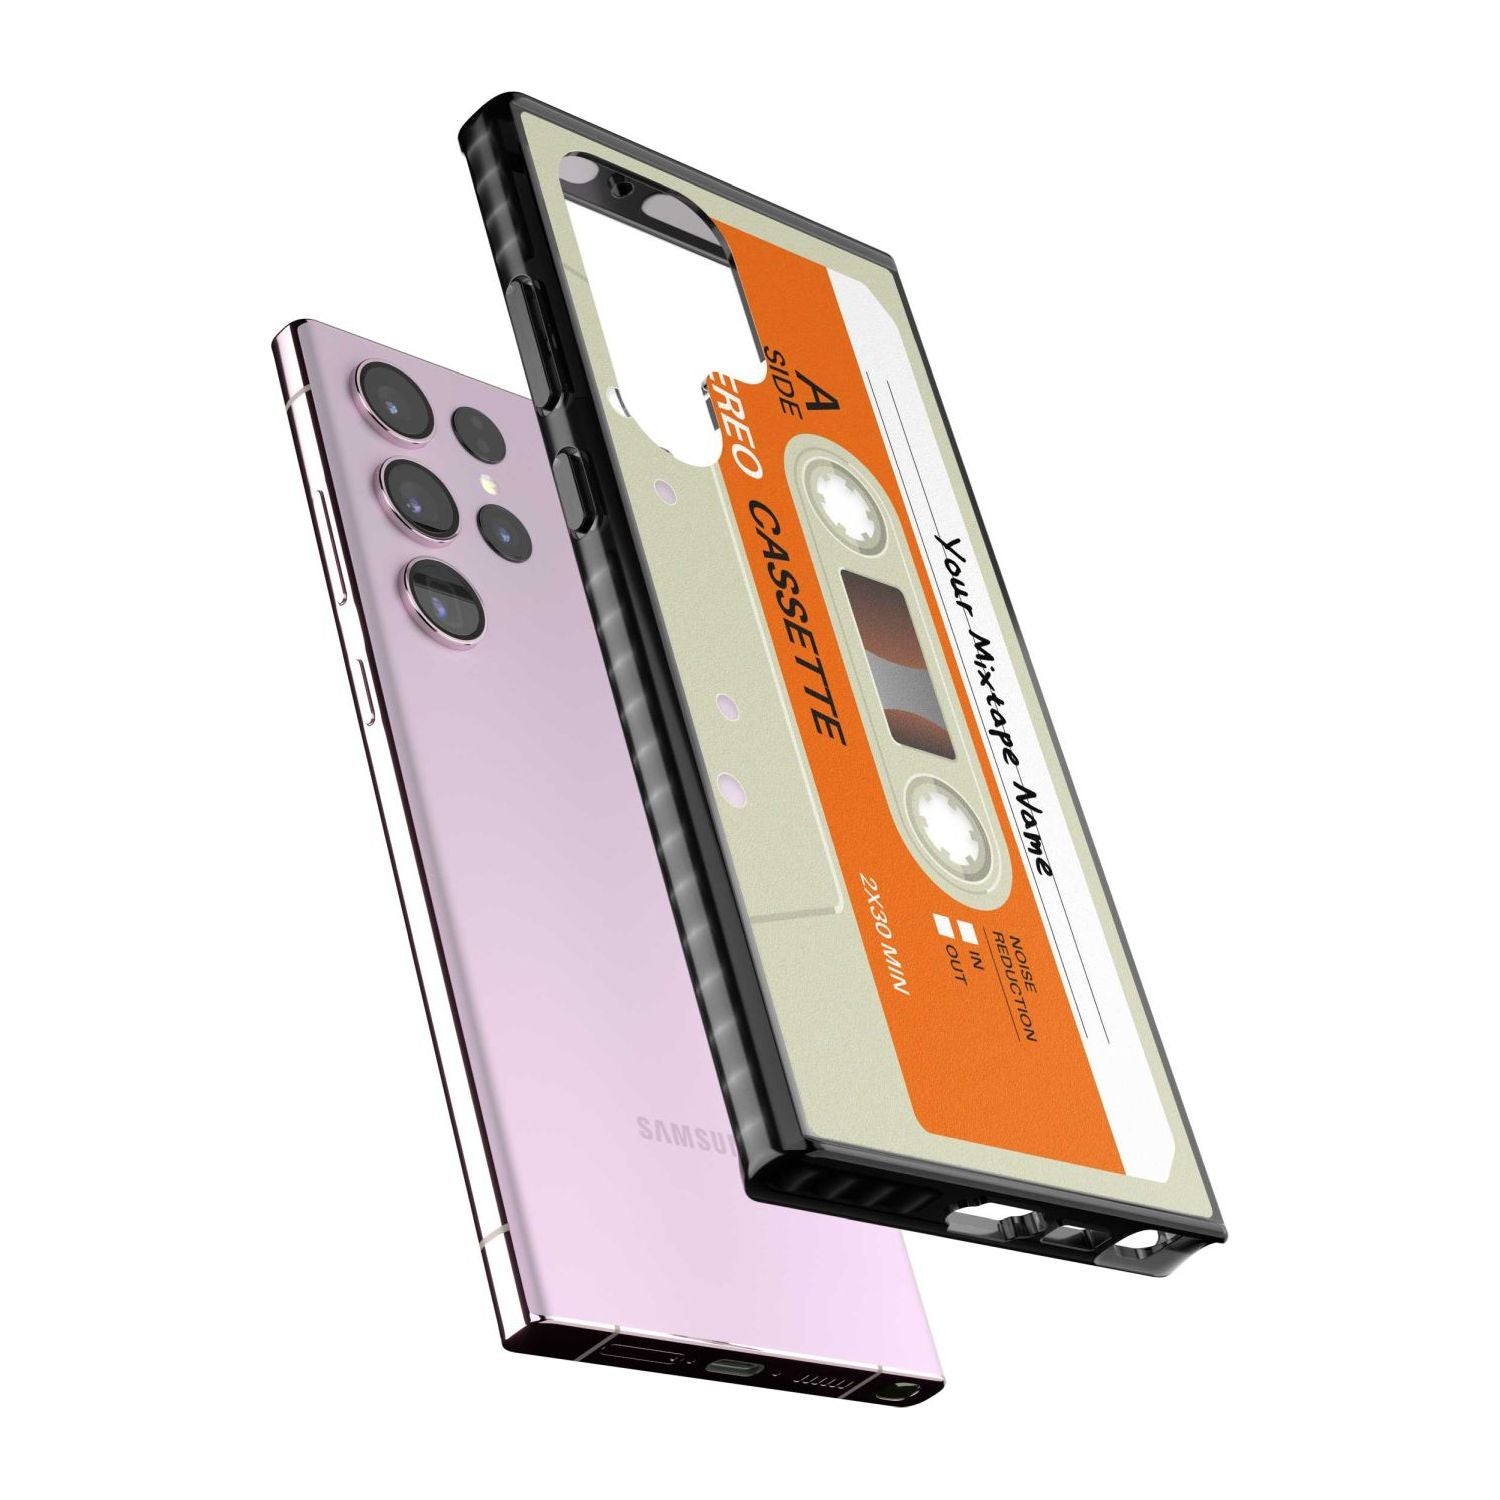 Personalised Classic Cassette